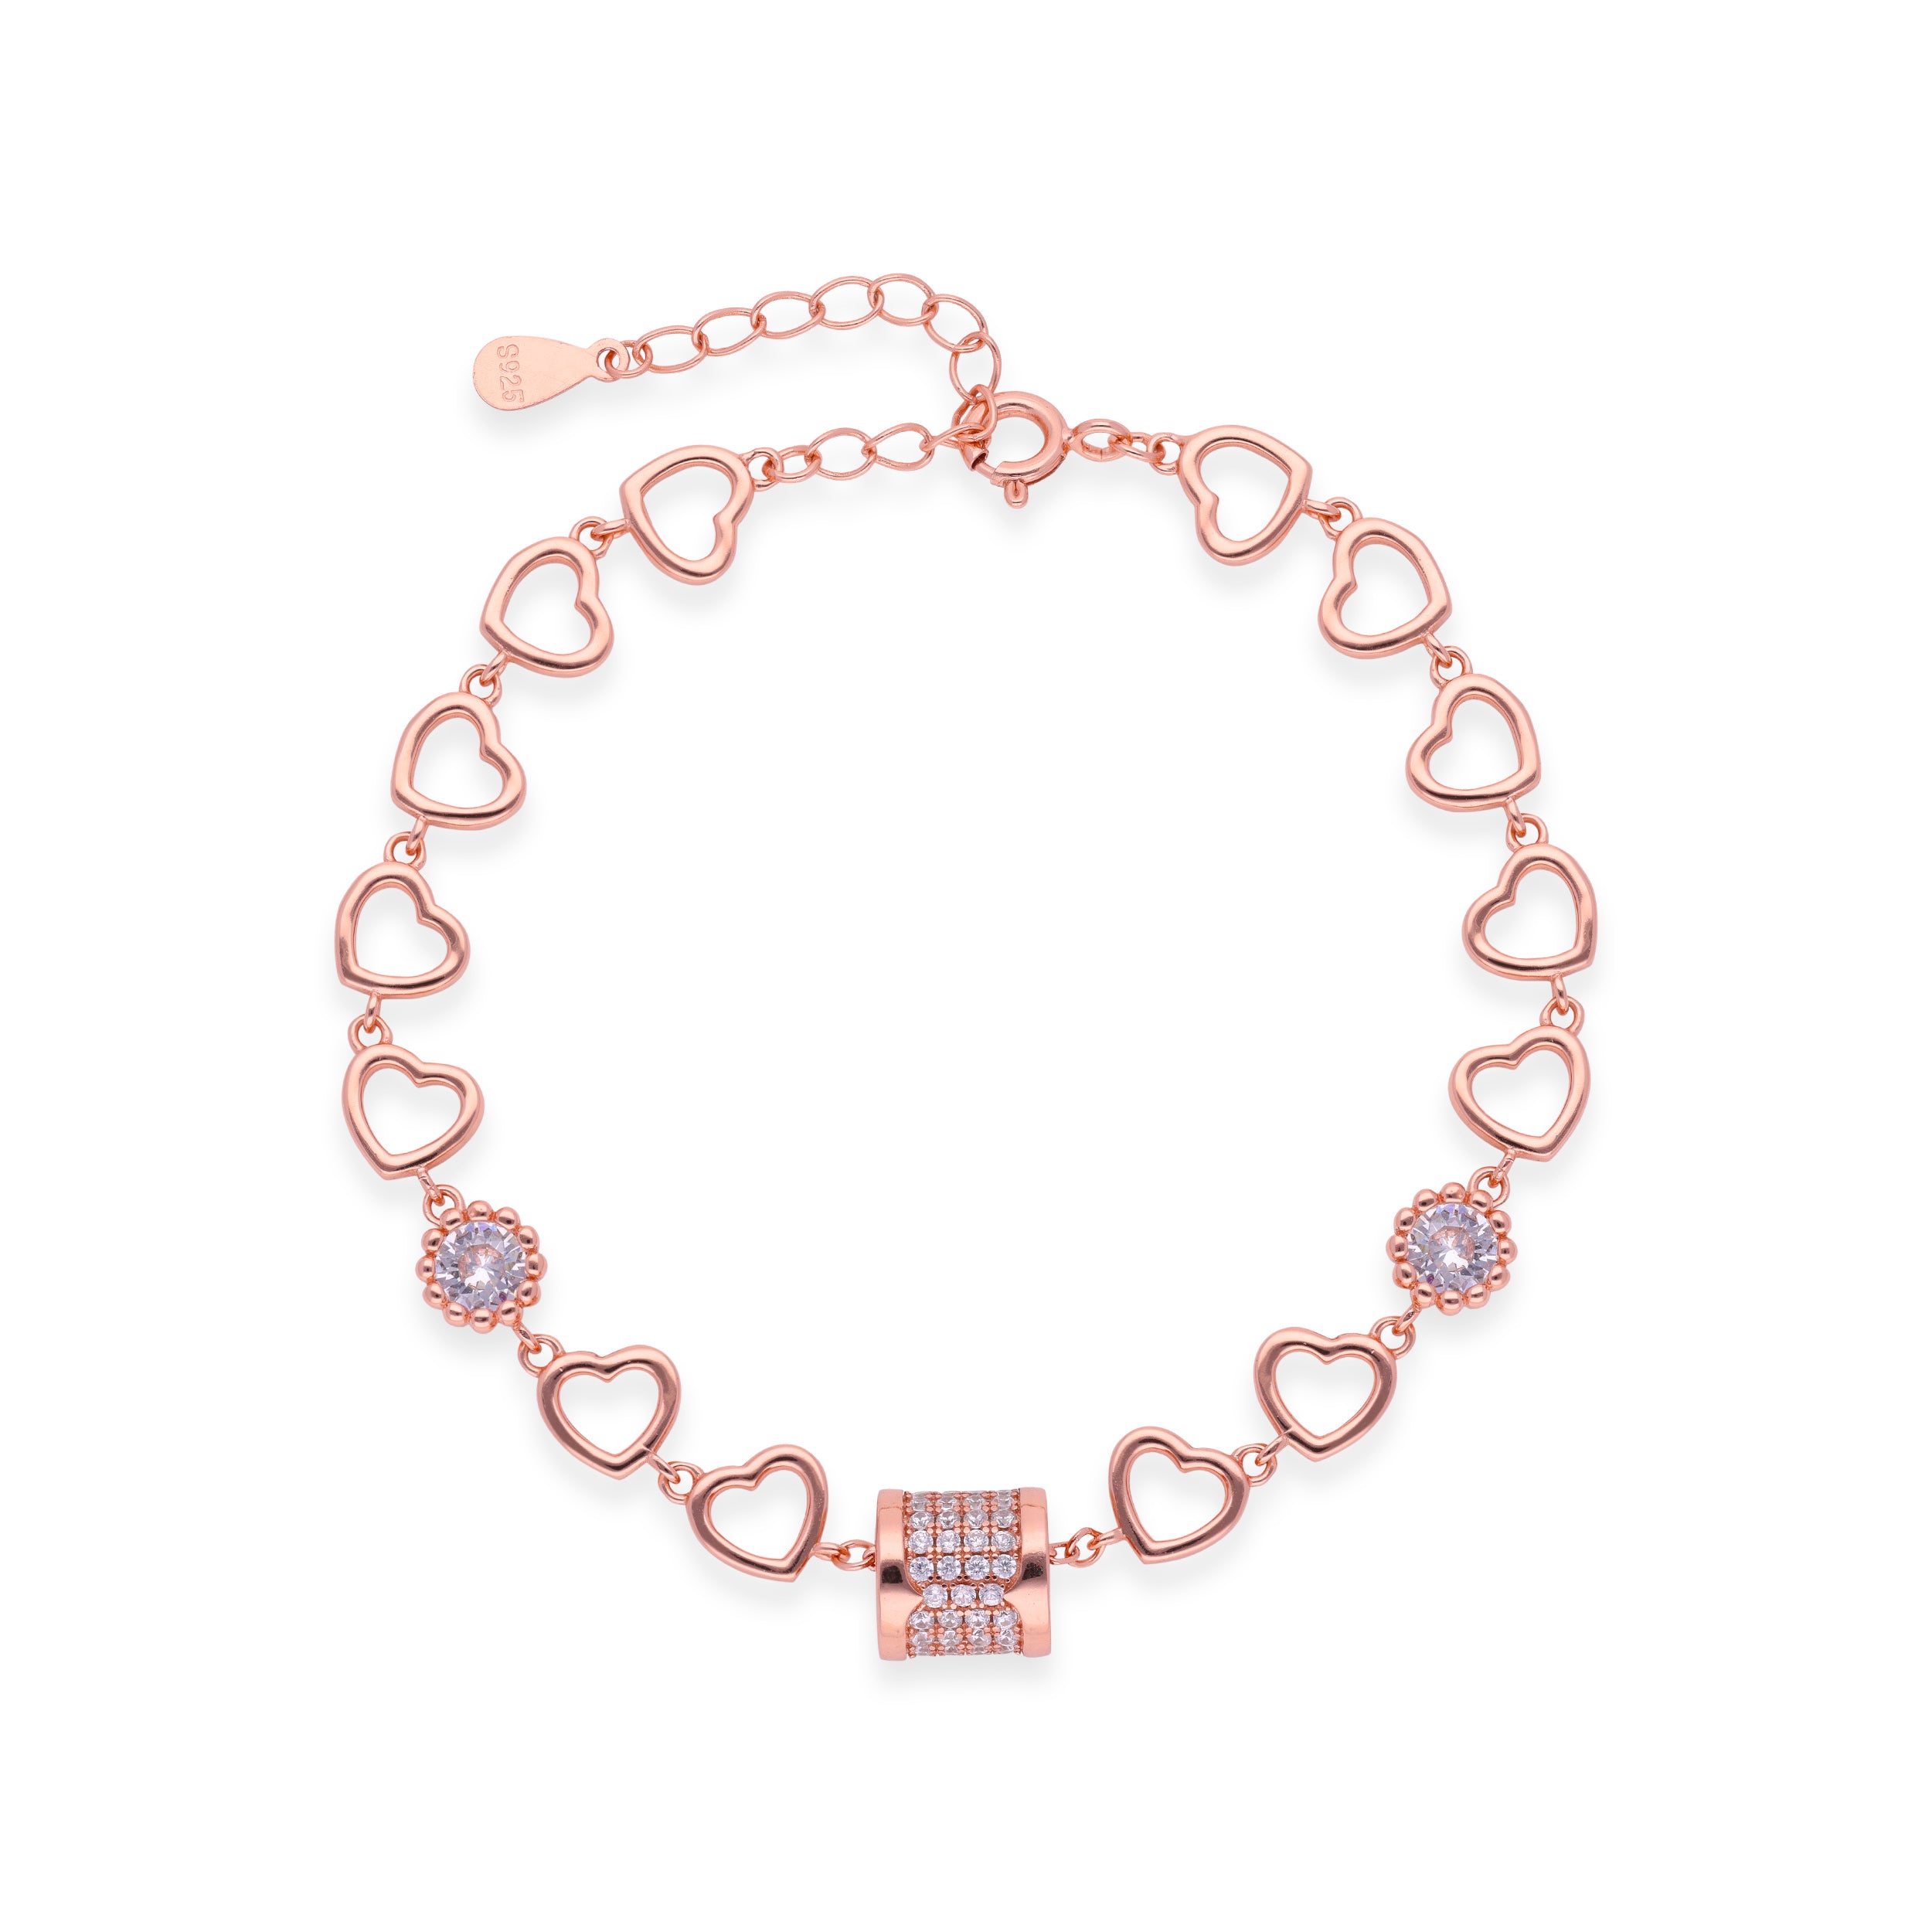 Rose Gold Heart Charm Bracelet with Pave Set Accents | SKU : 0003109786, 0003109779